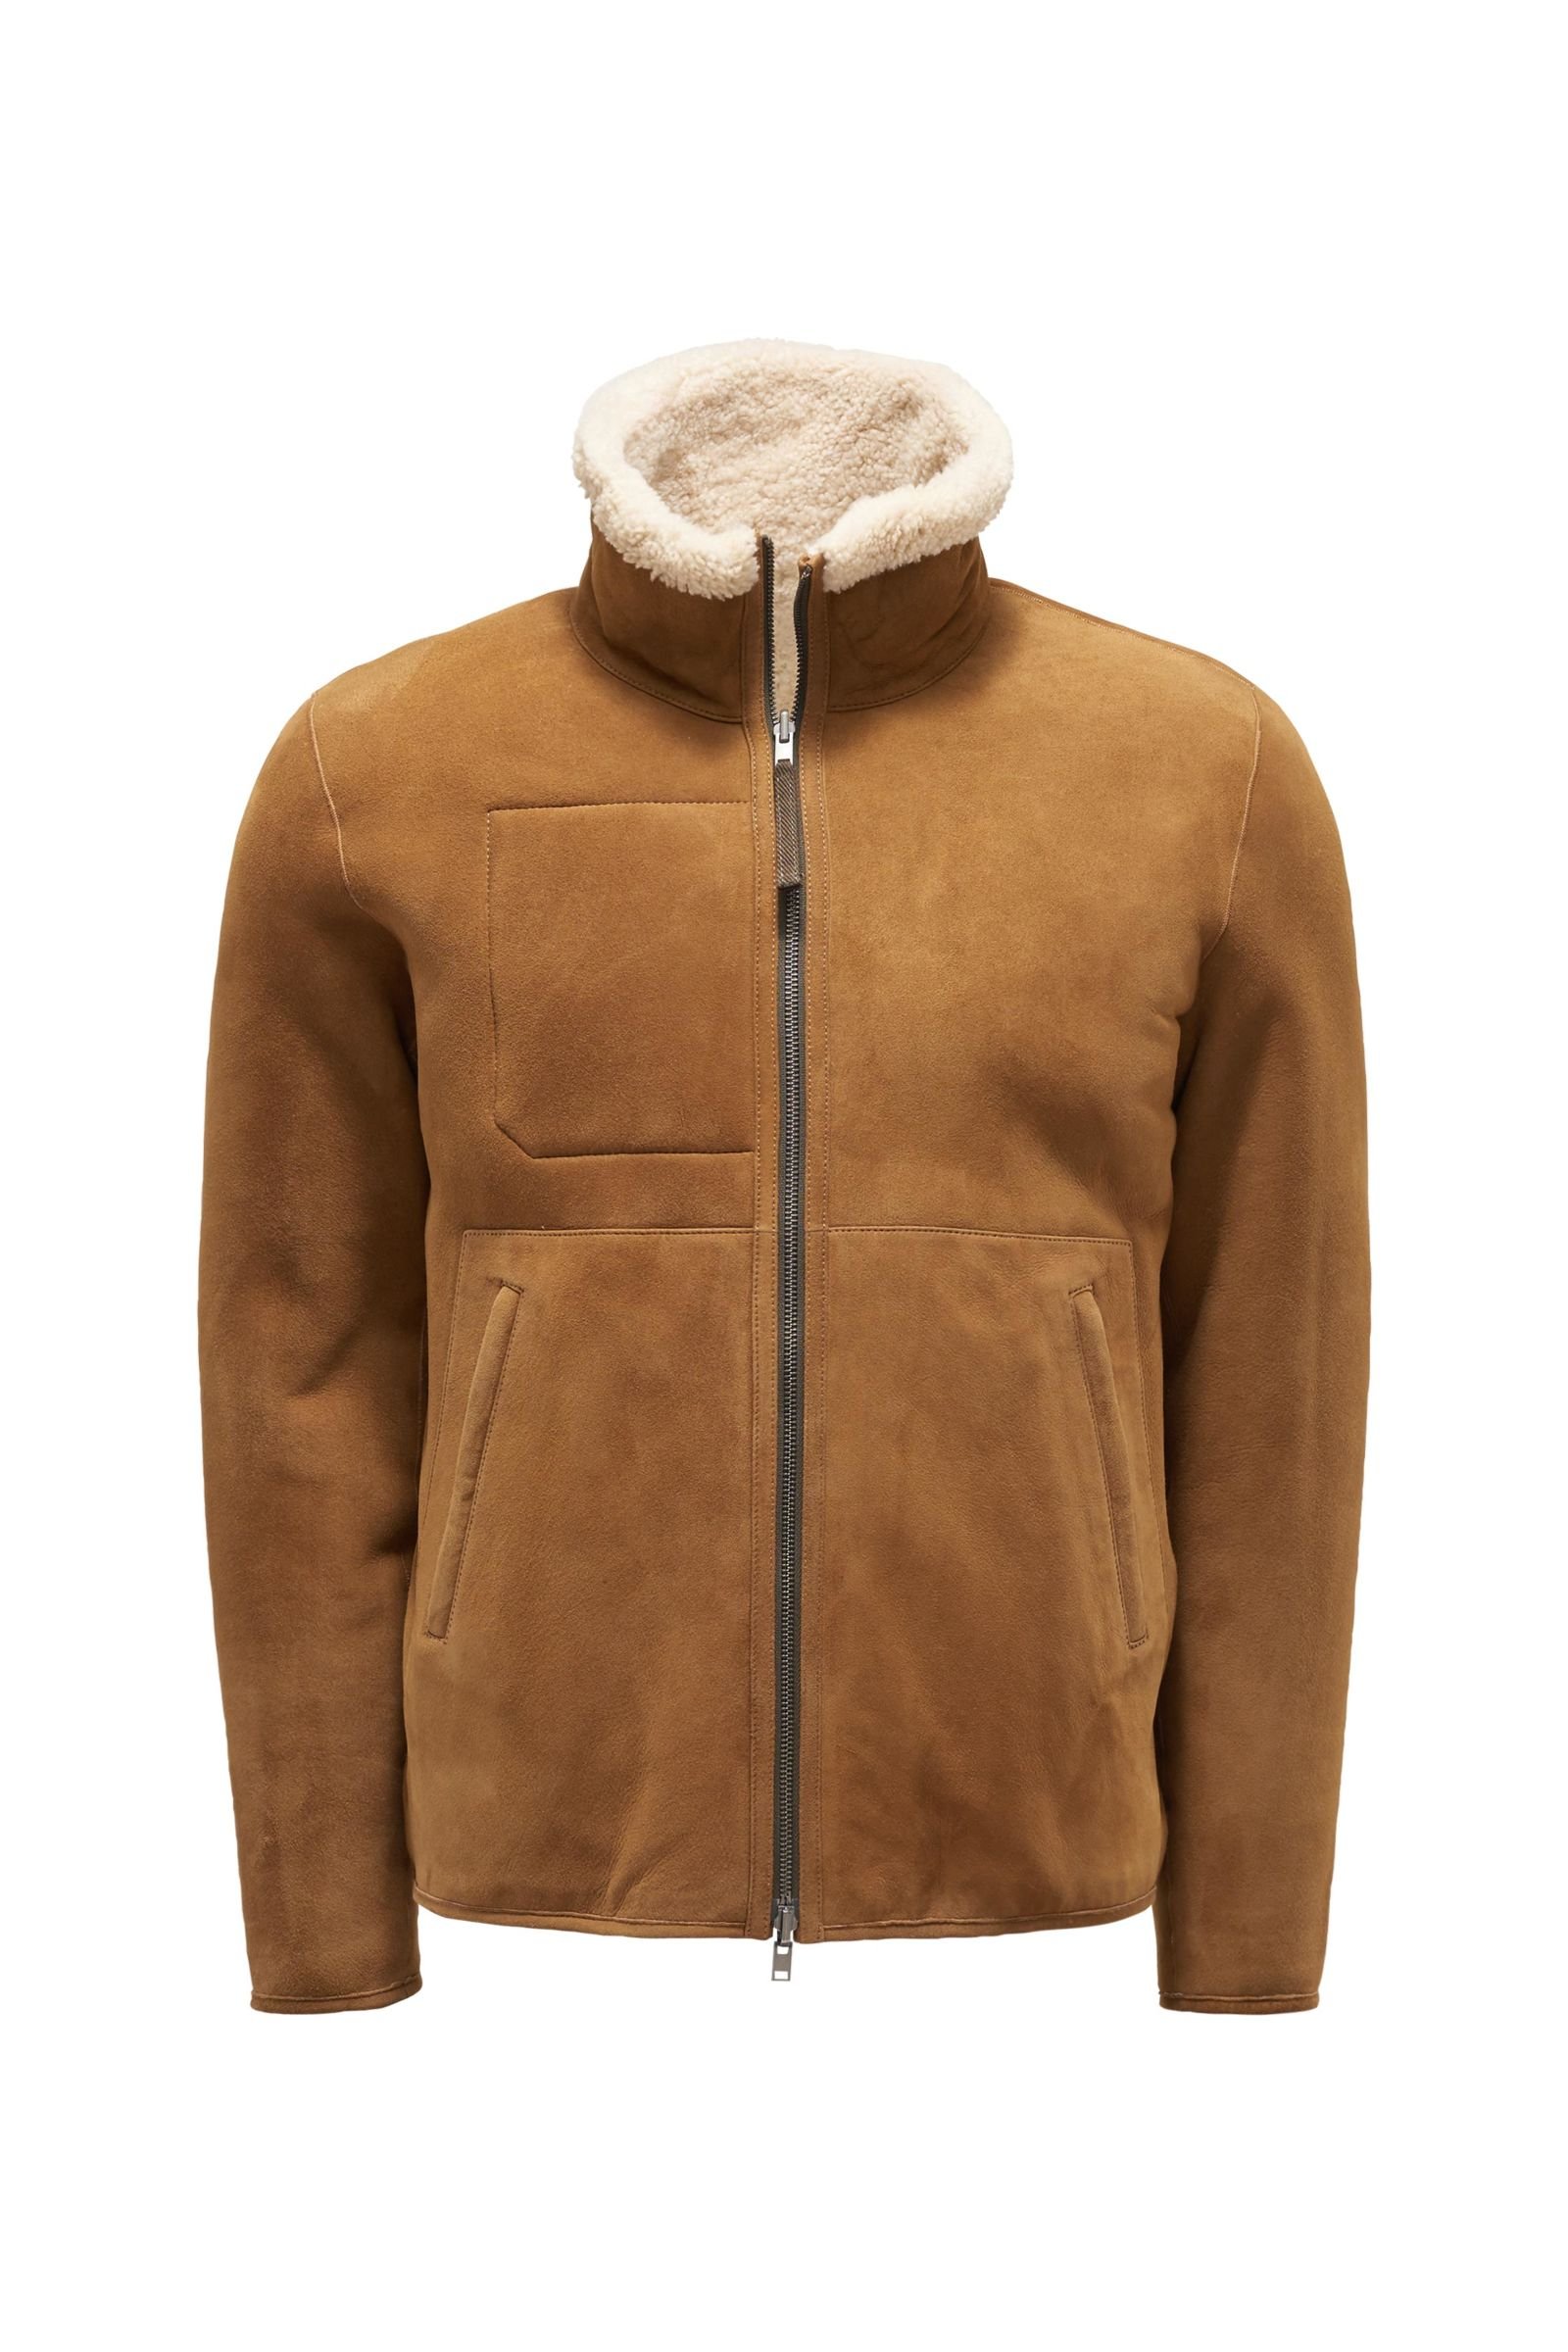 CLOSED reversible shearling jacket light brown/beige | BRAUN Hamburg